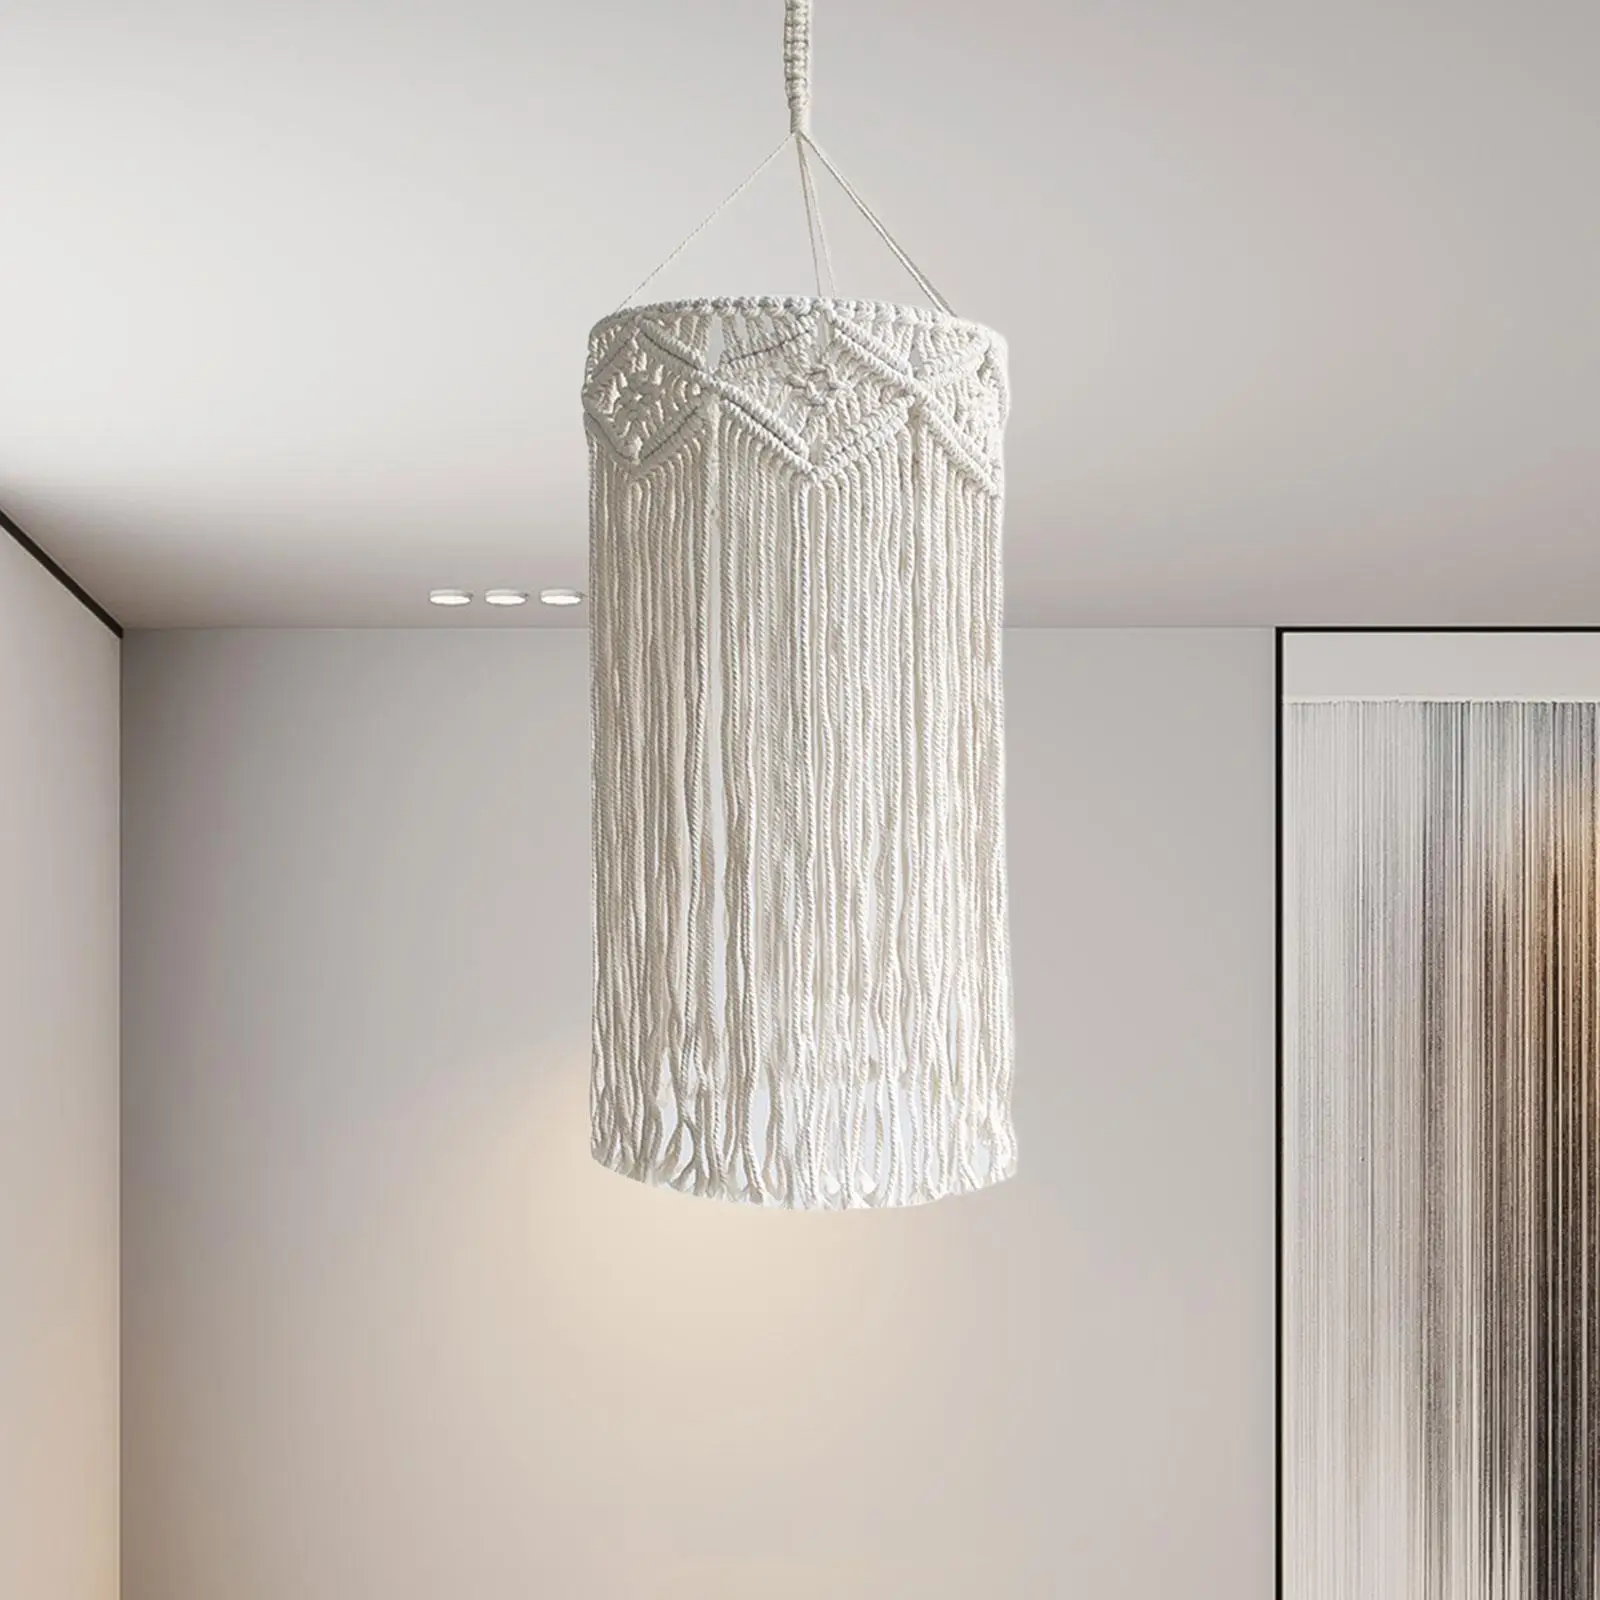 Bohemian Hanging Macrame Light Shade Versatile Ceiling Light Cover Lampshade Handmade for Balconies, Restaurants, Cafes, Hotels